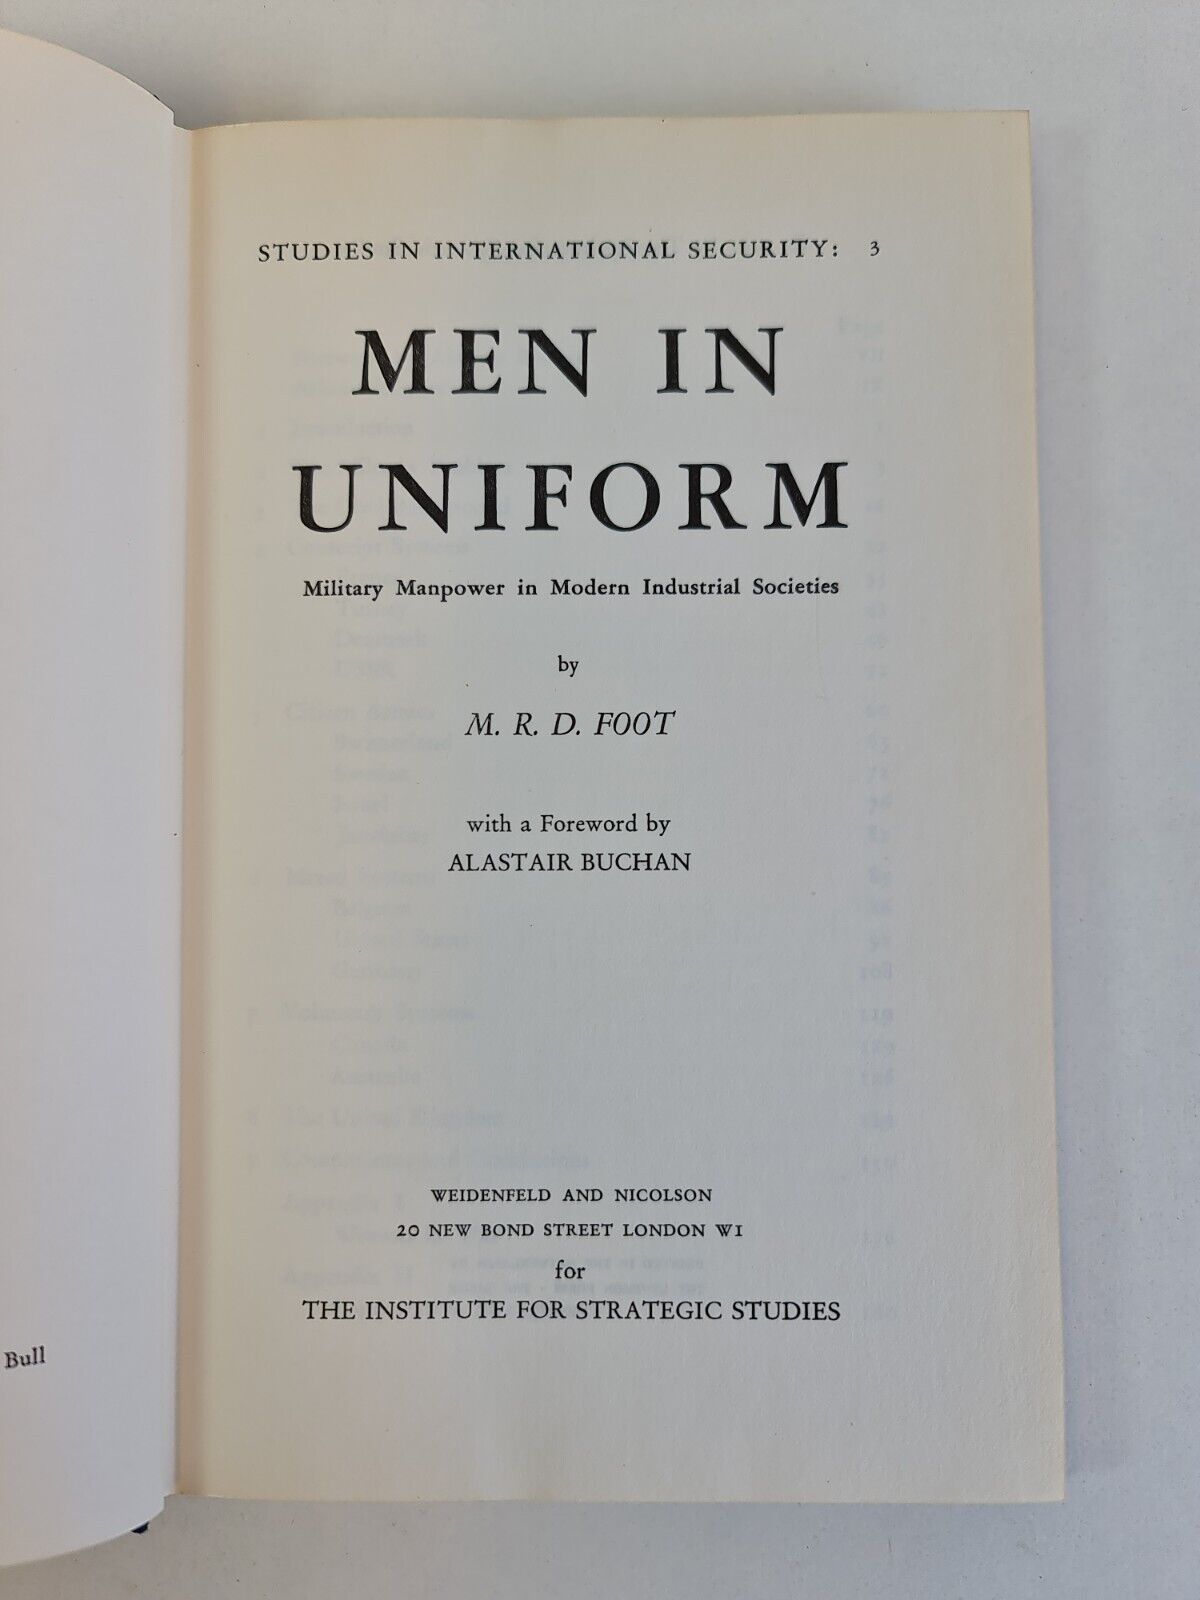 Men in Uniform: Military Manpower in Modern Industrial Societies by M R D Foot